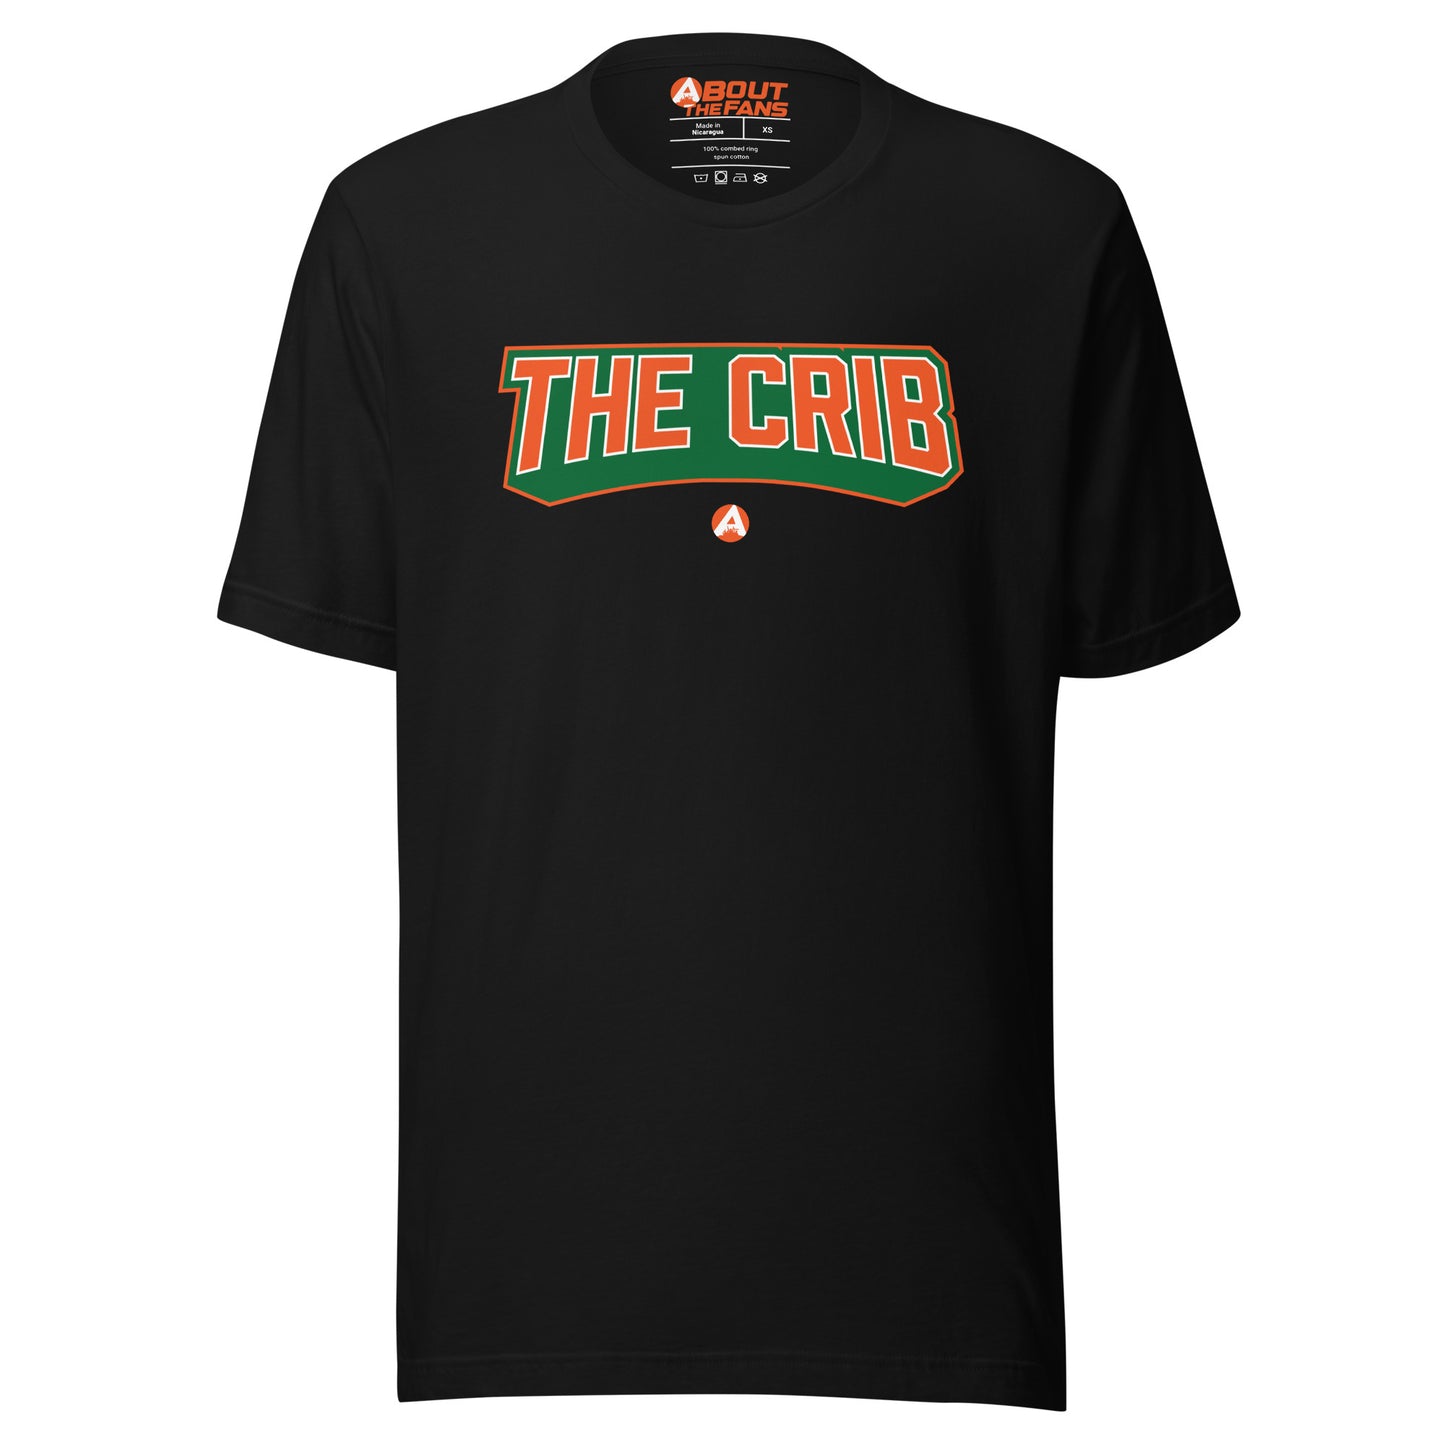 The Crib 305 Shirt